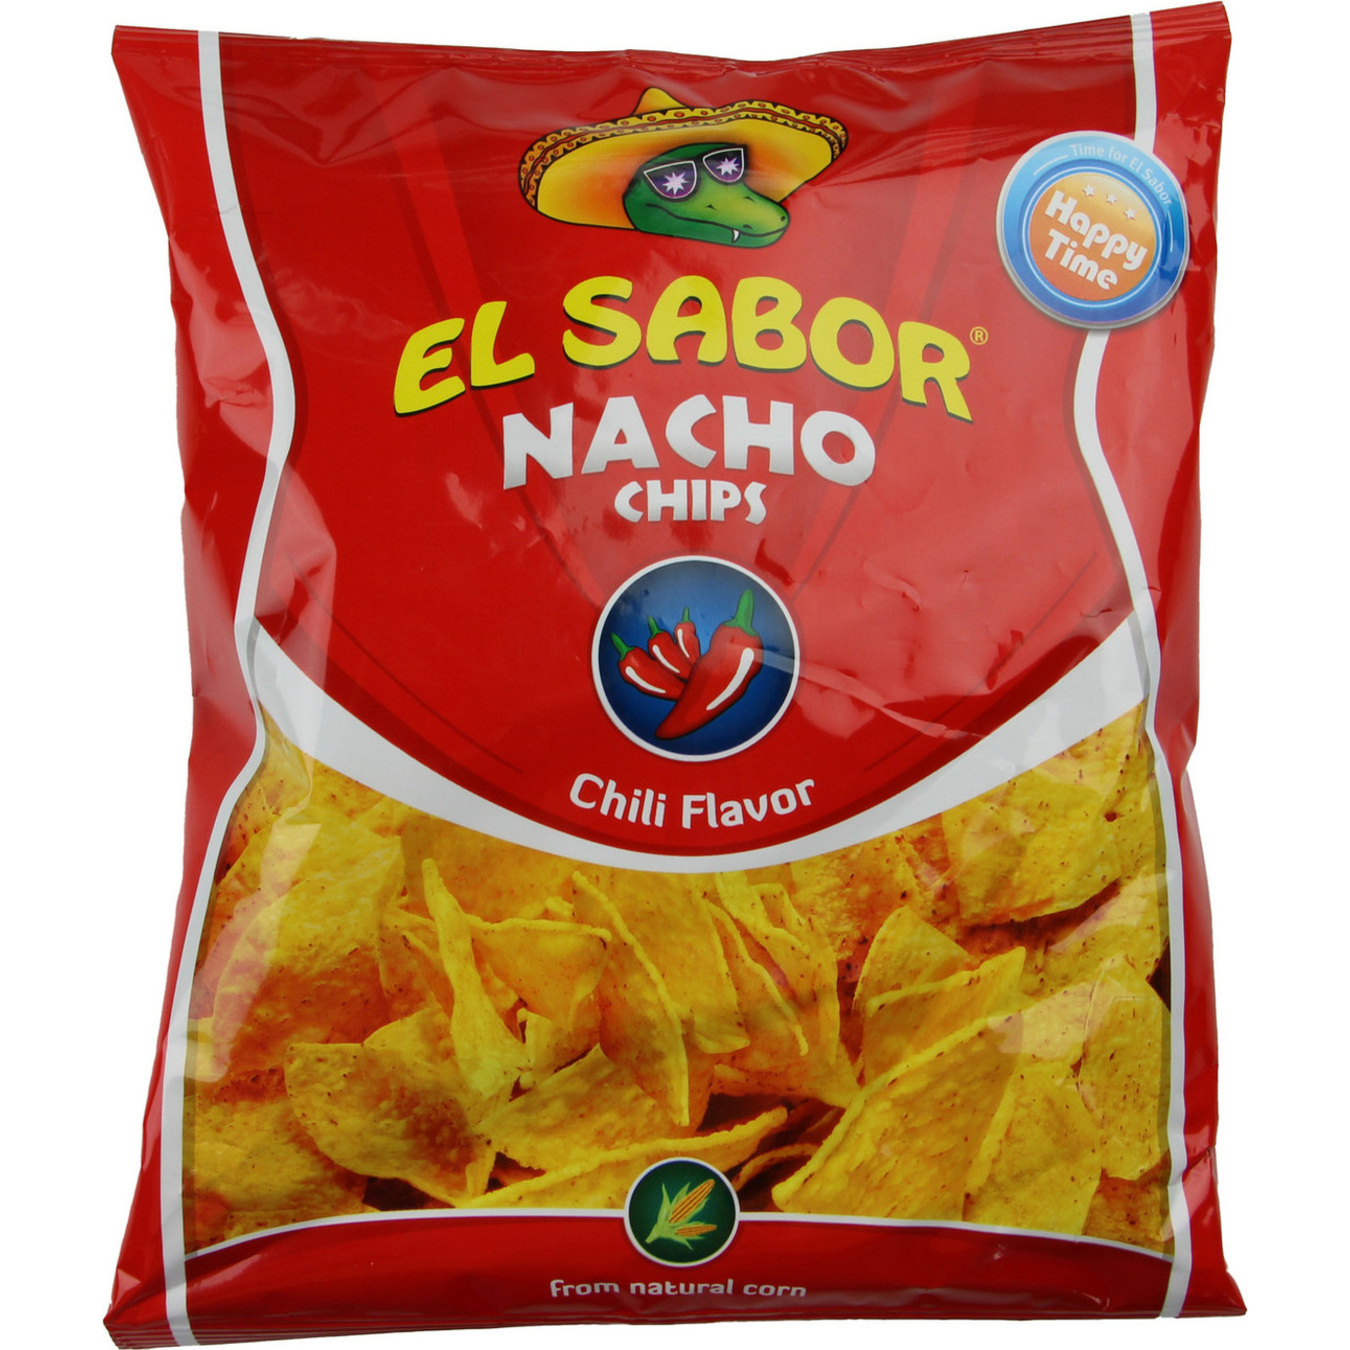 El Sabor Nacho Chips with chili flavor 100g